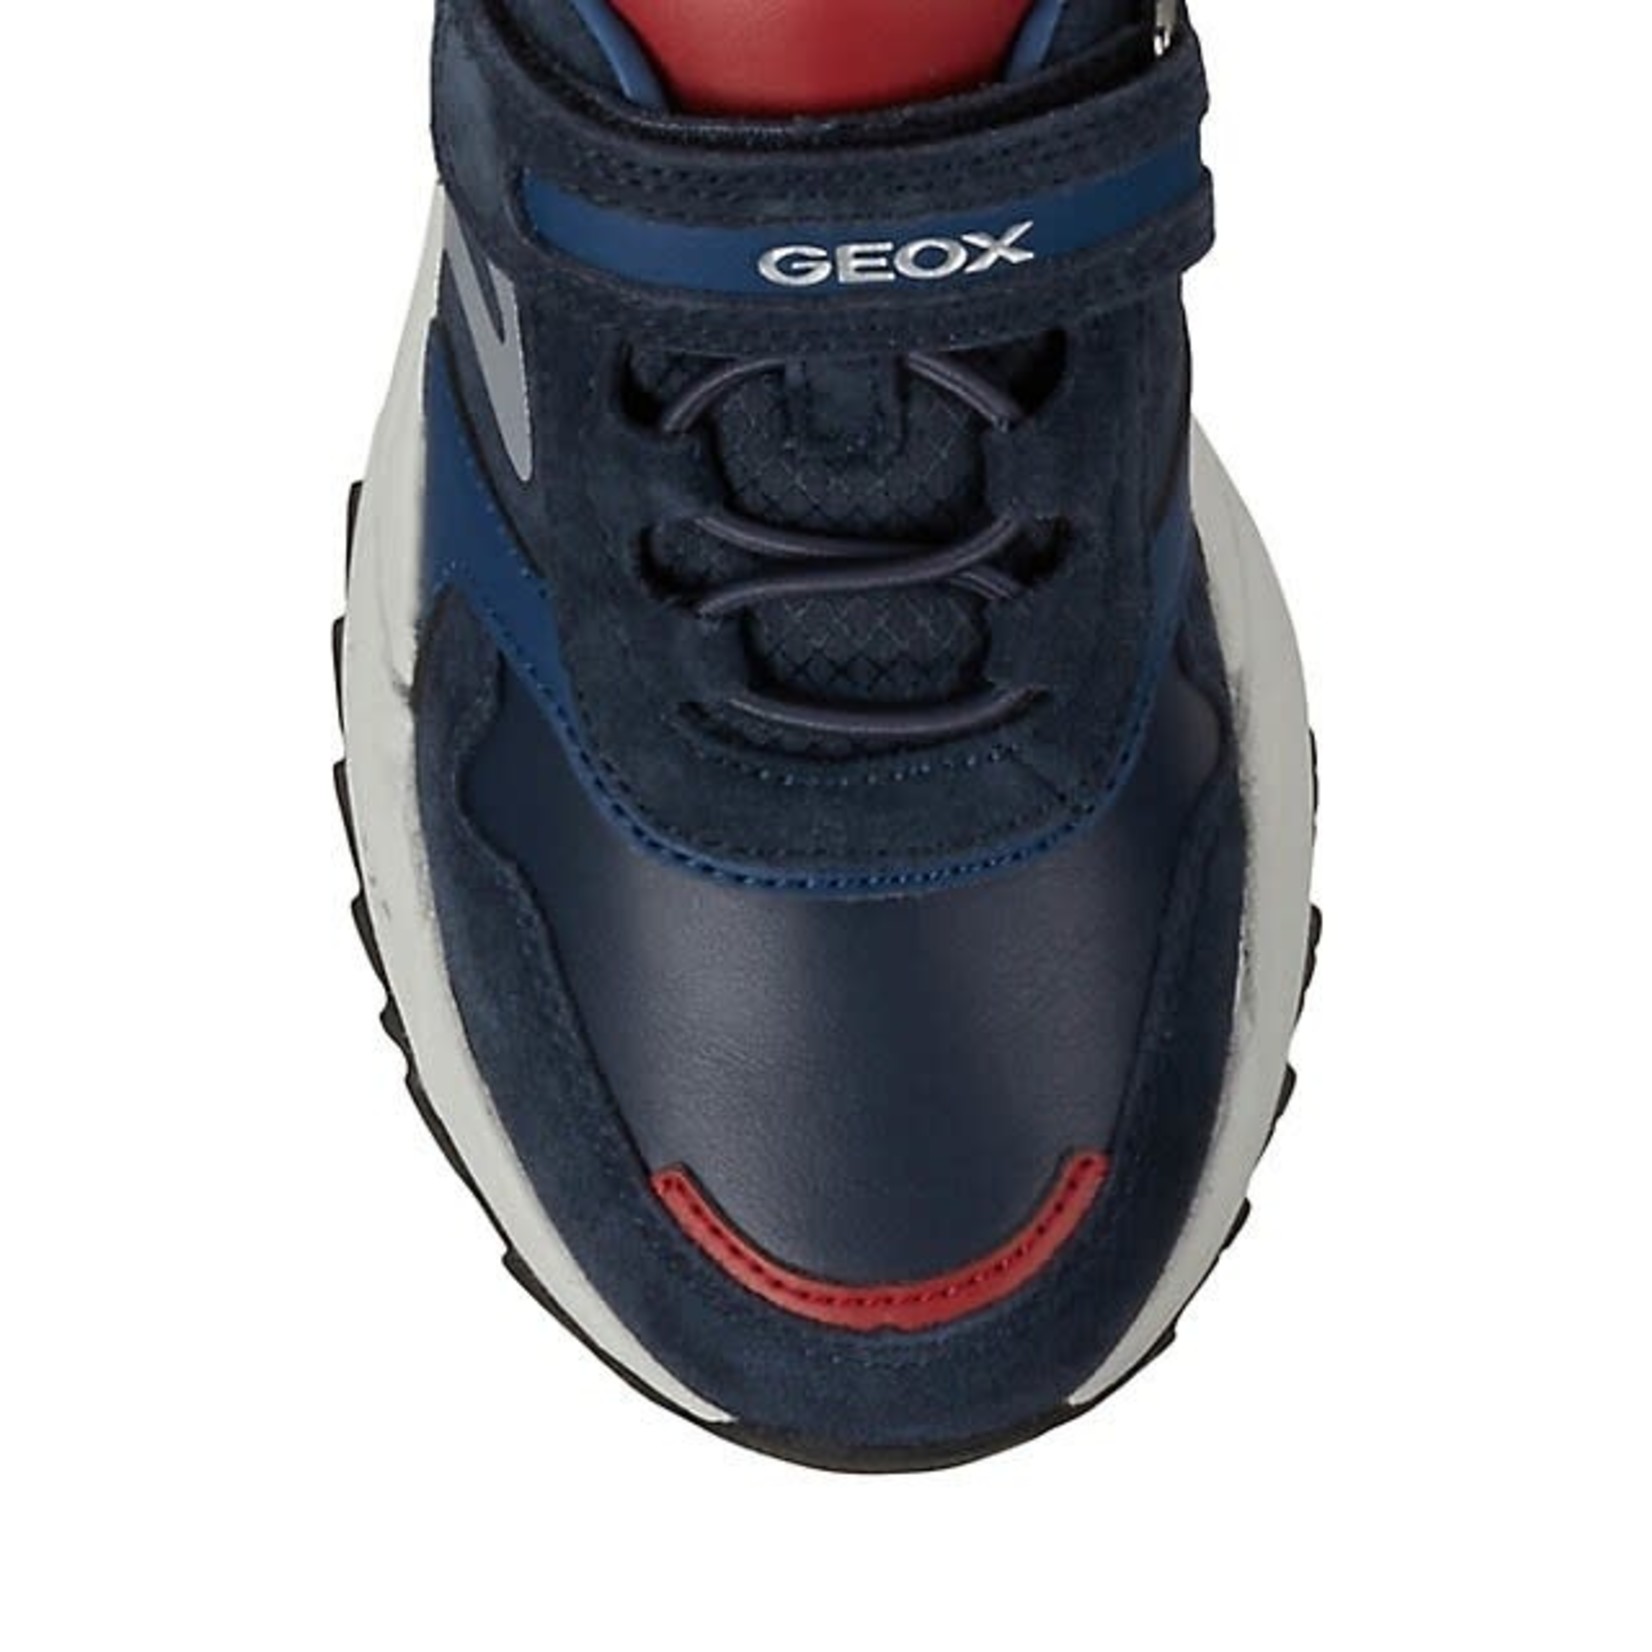 Geox GEOX - Chaussures de sport 'B. Heevok - Suede et Synth' - Navy/Red